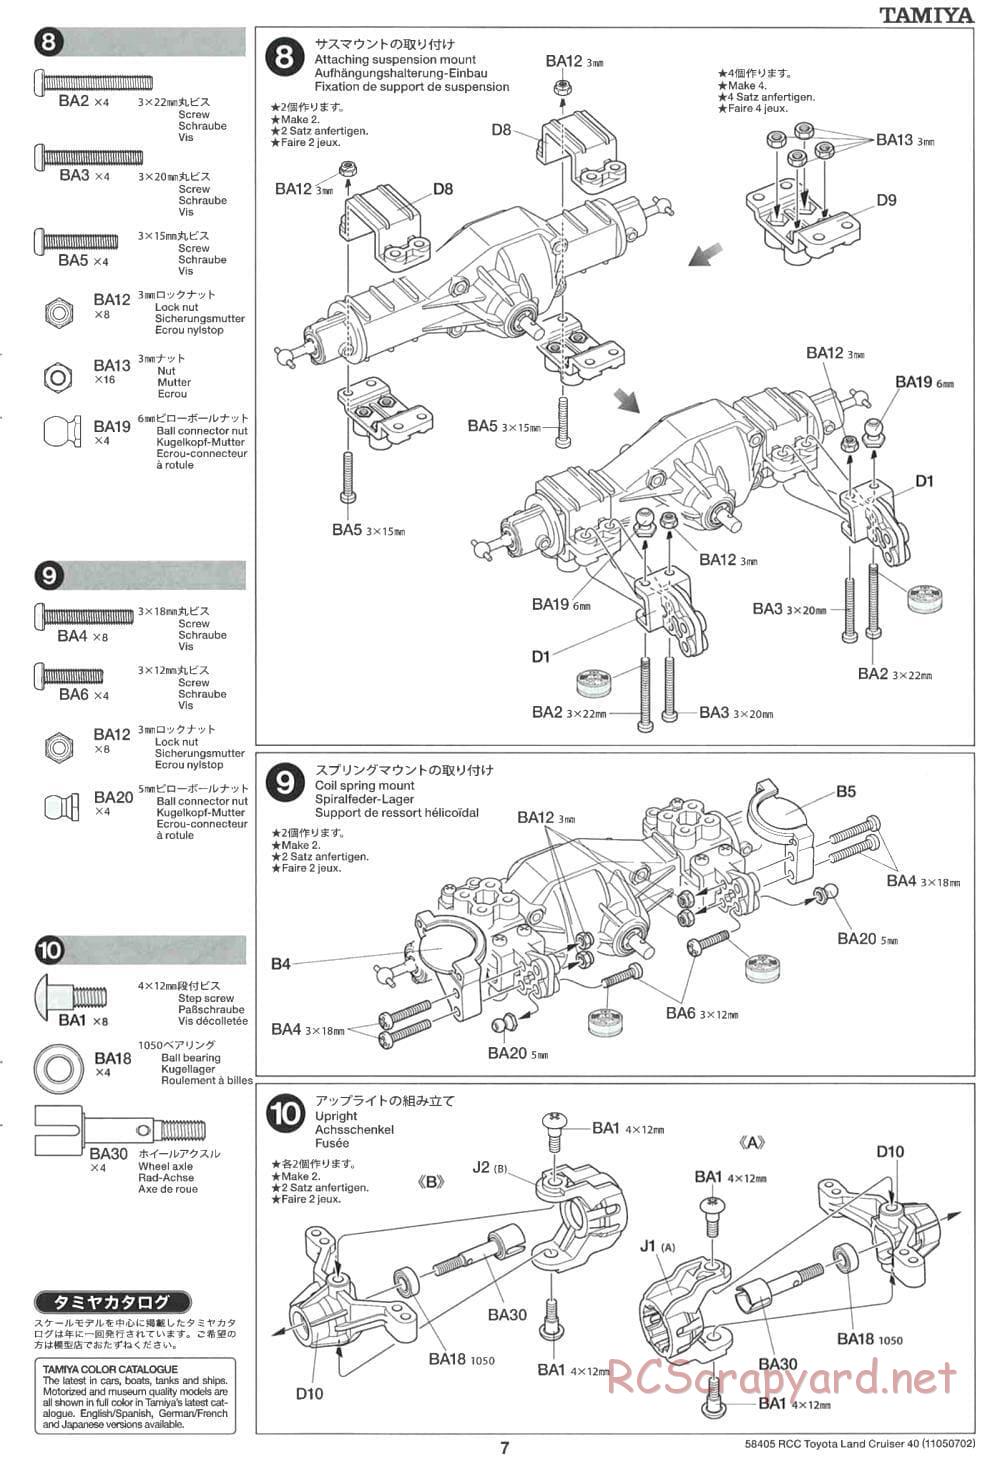 Tamiya - Toyota Land Cruiser 40 - CR-01 Chassis - Manual - Page 7